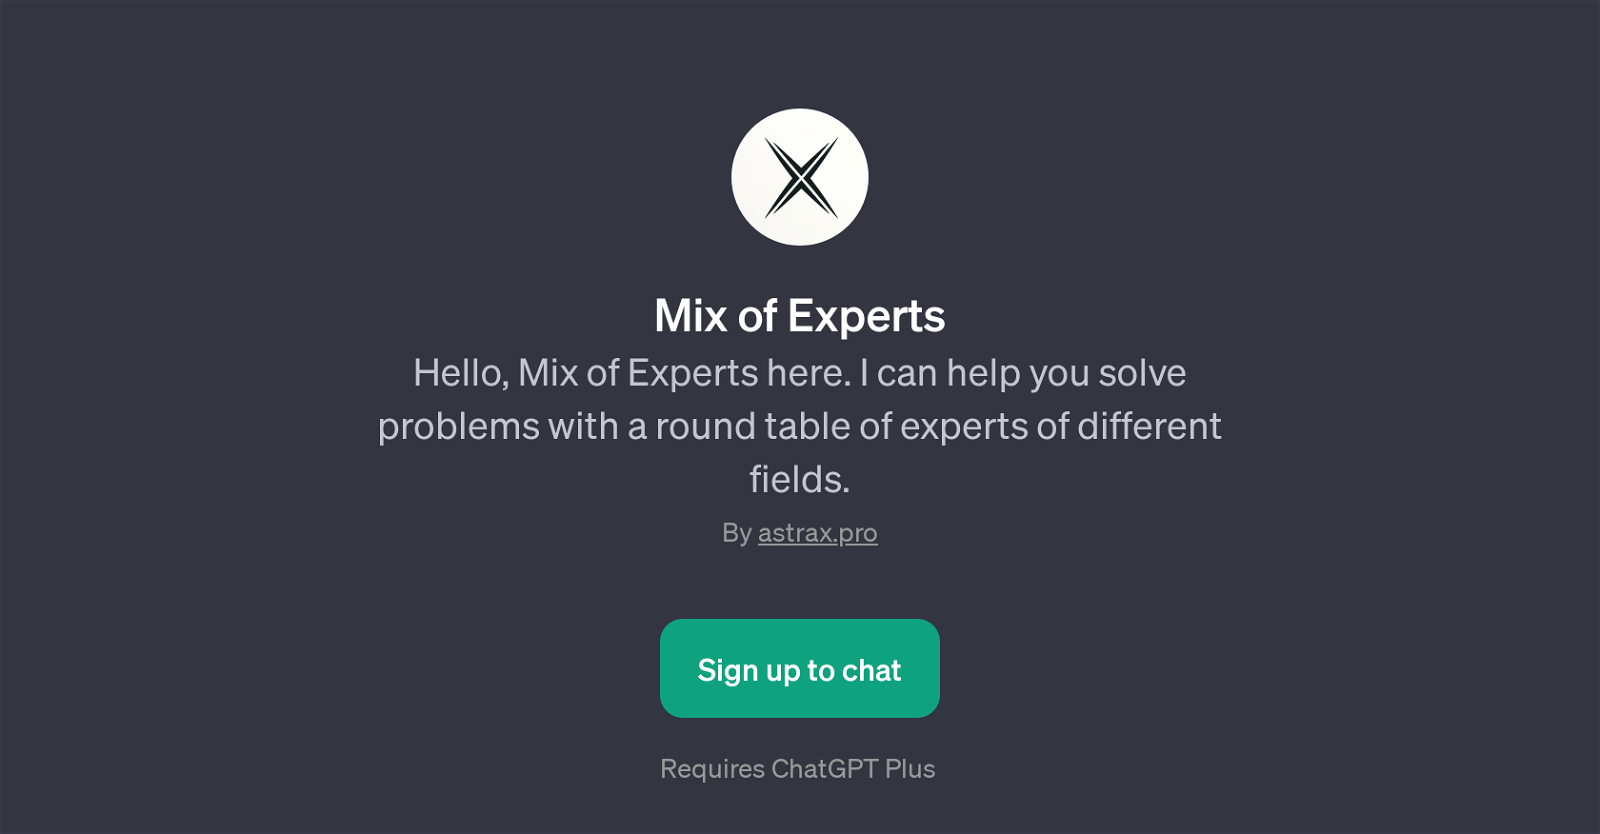 Mix of Experts website